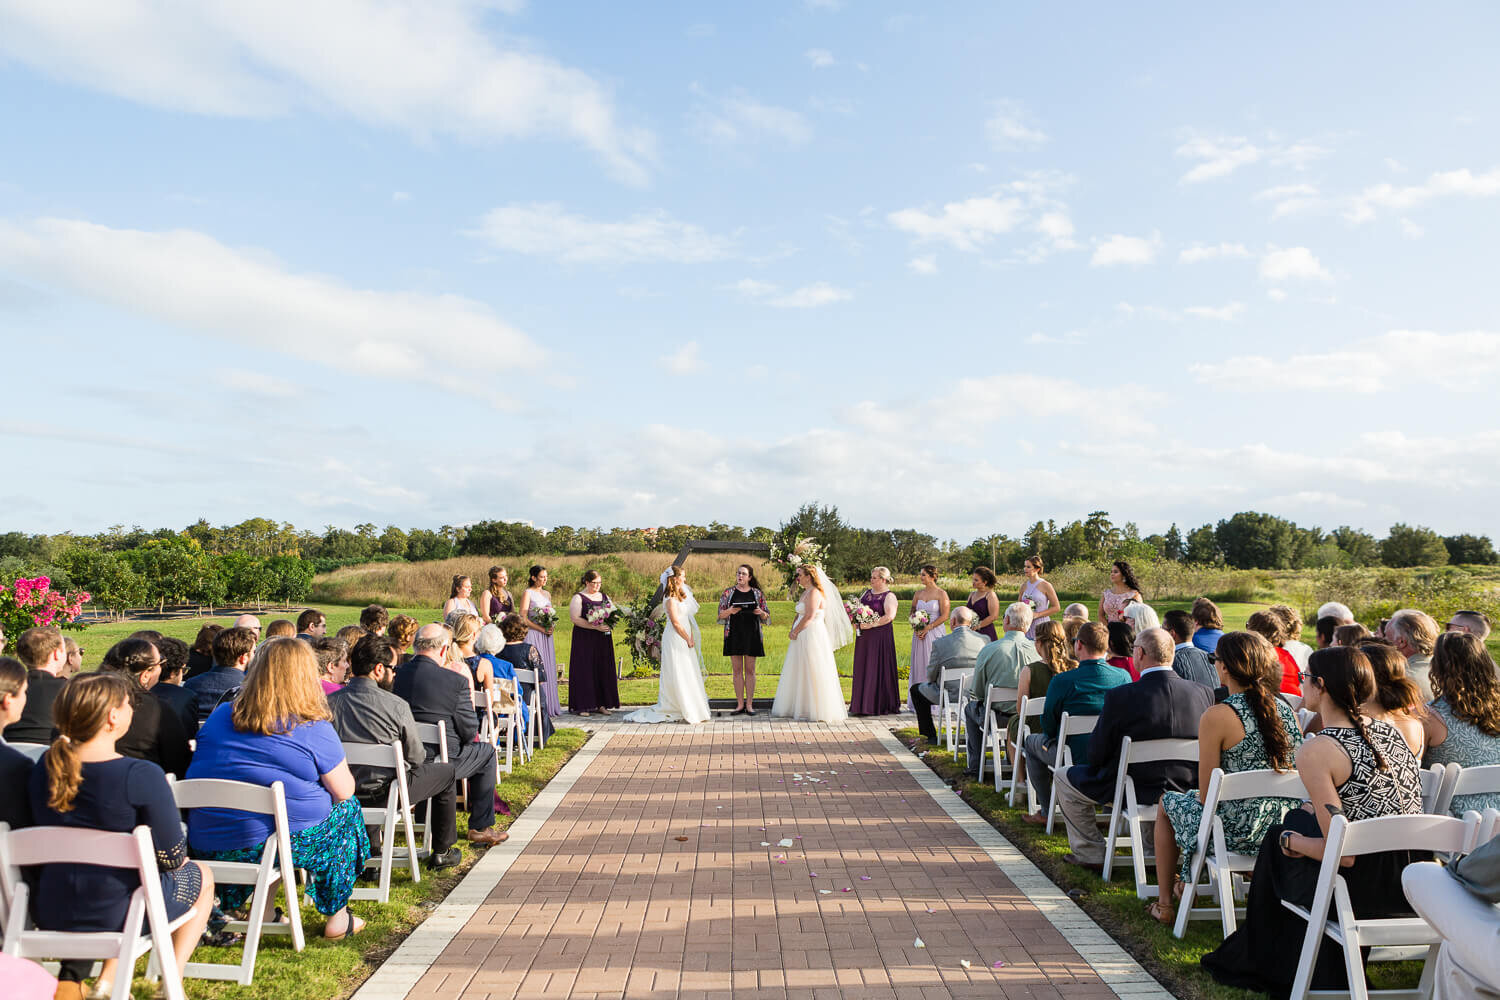  same-sex wedding photos from Island Grove Winery at Formosa Gardens 